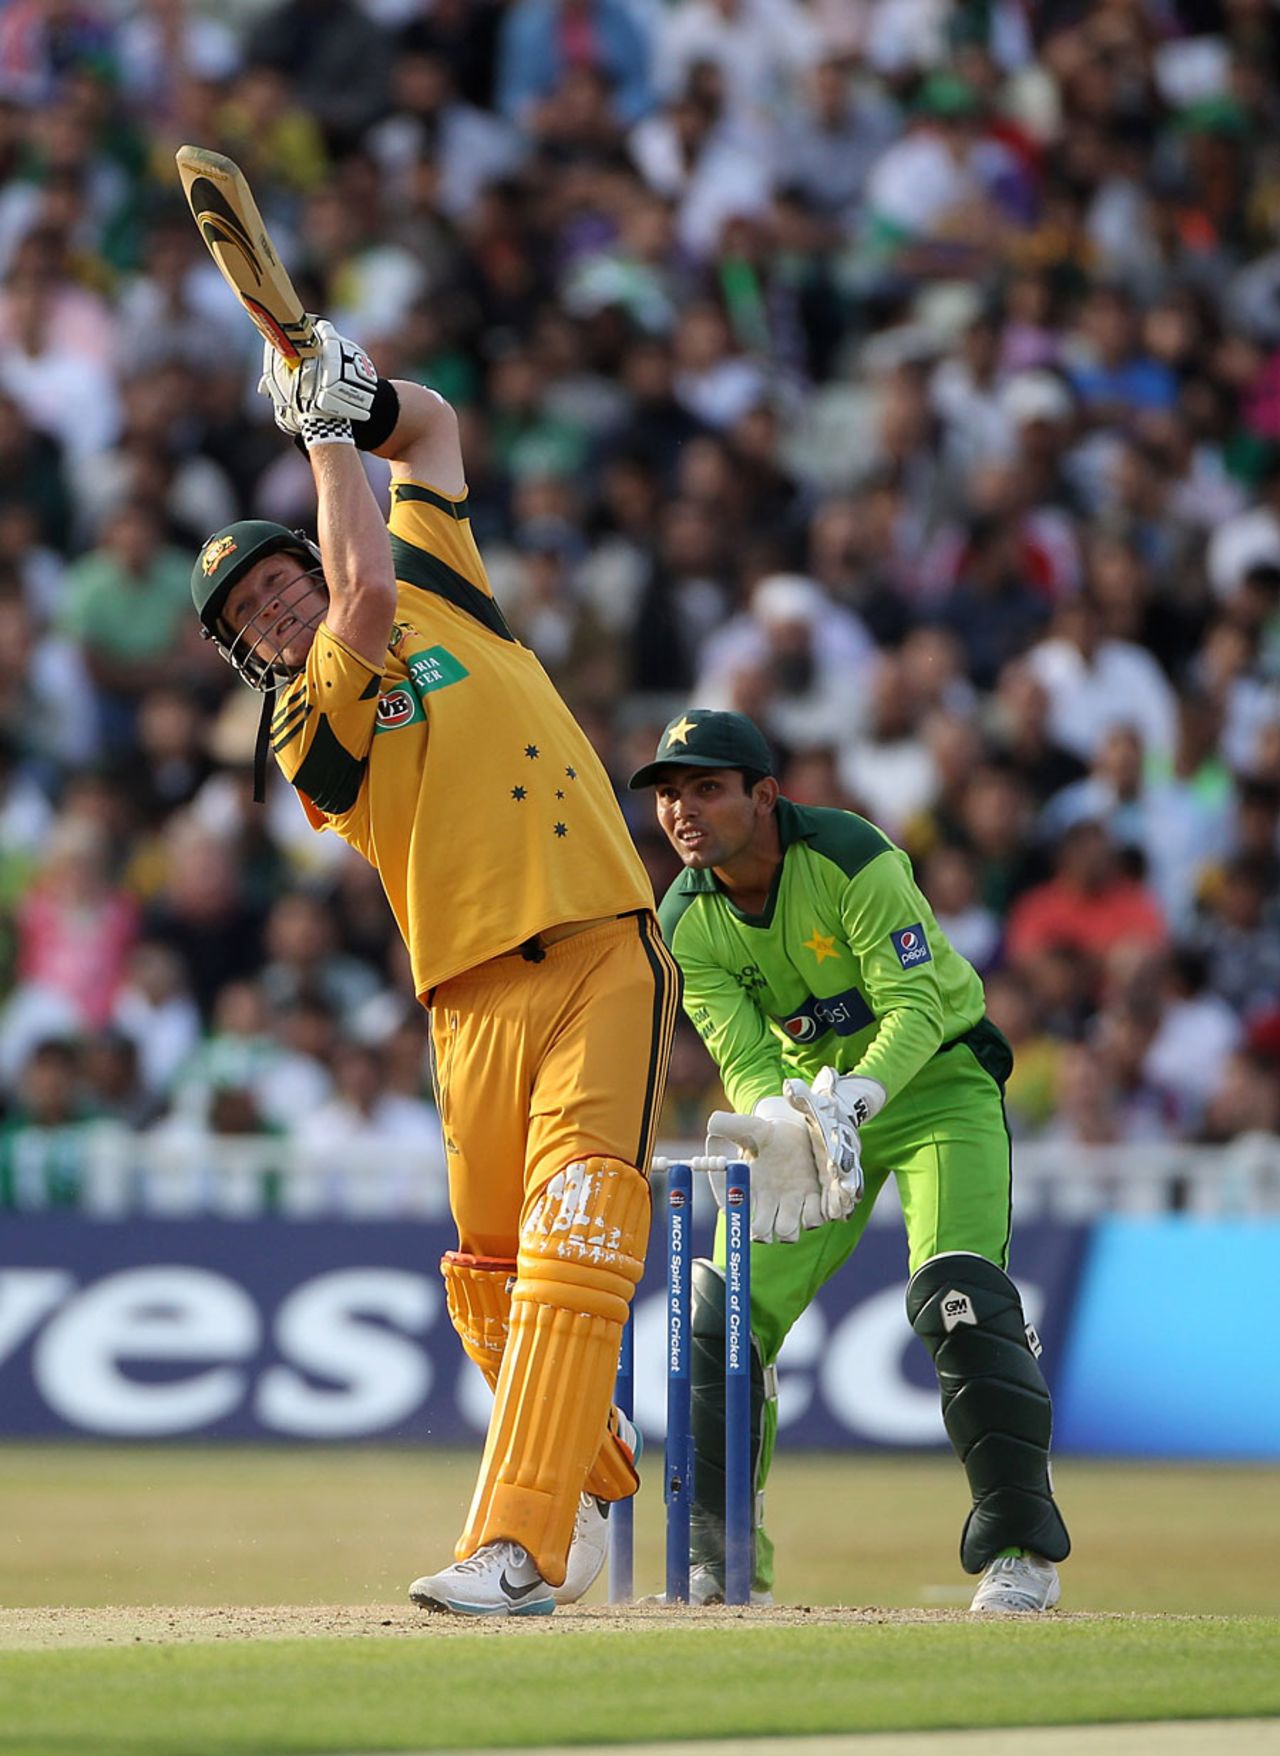 Cameron White struck Afridi for a booming six down the ground, Pakistan v Australia, 2nd Twenty20, Edgbaston, July 6 2010